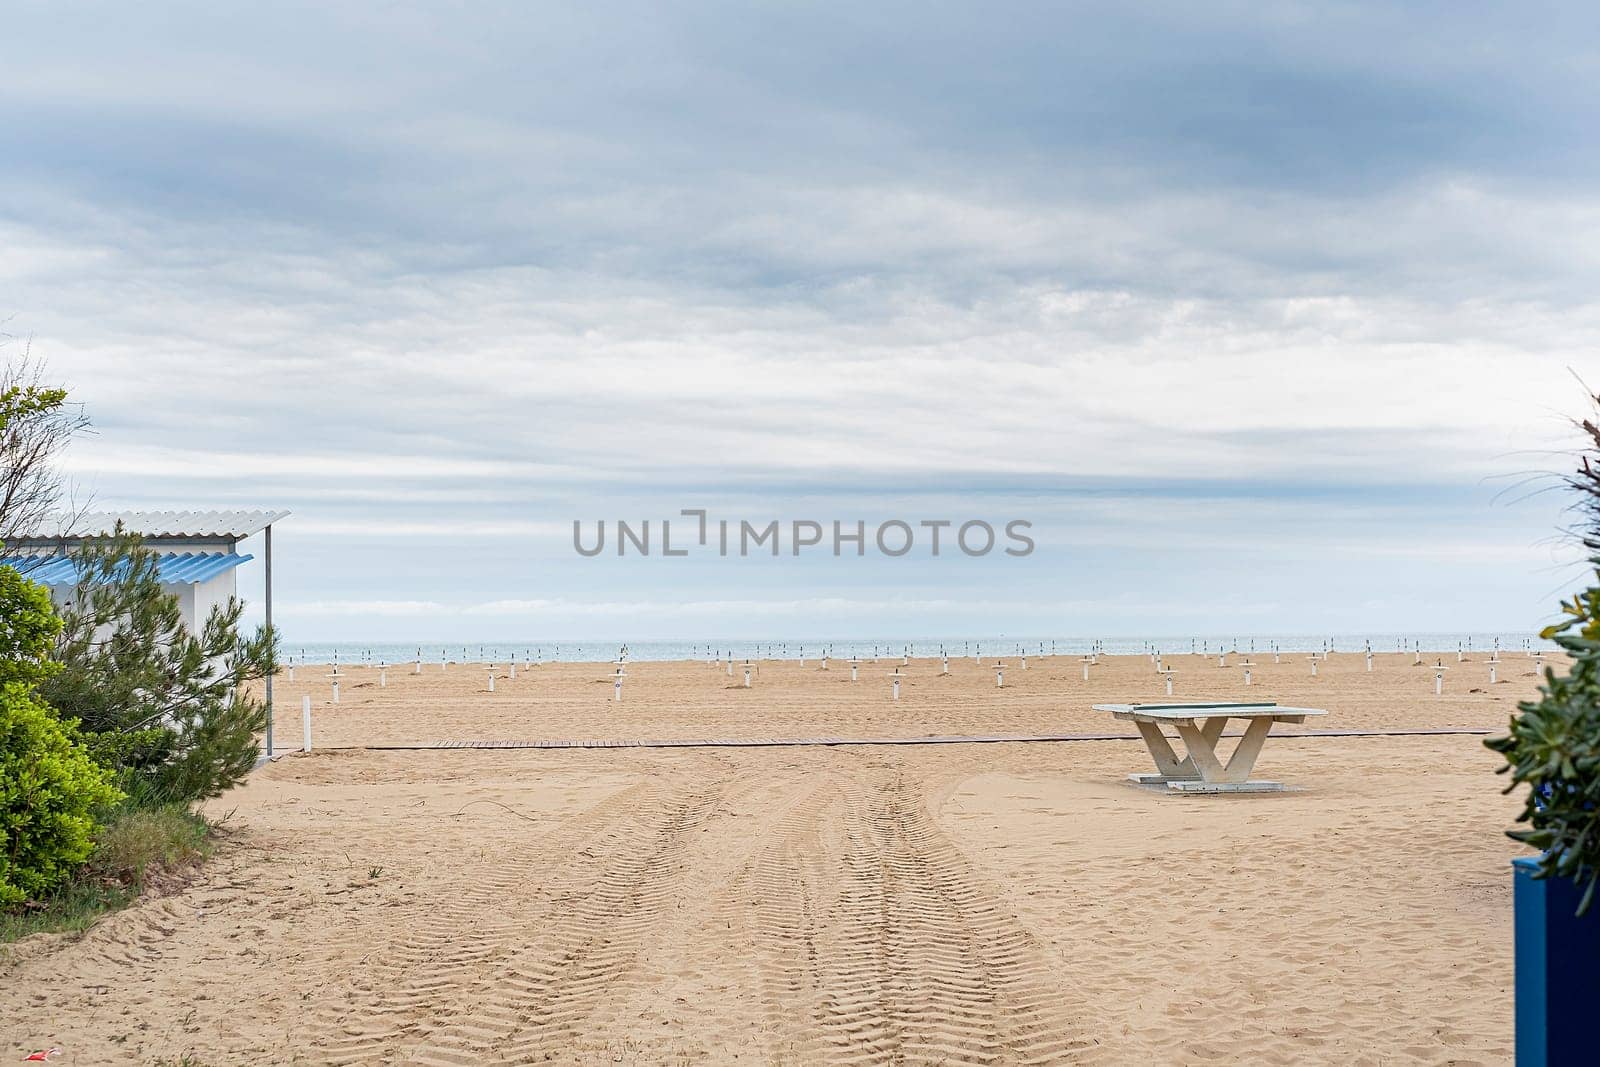 Deserted beach ready for summer vacation. European travel. Italy by Annavish